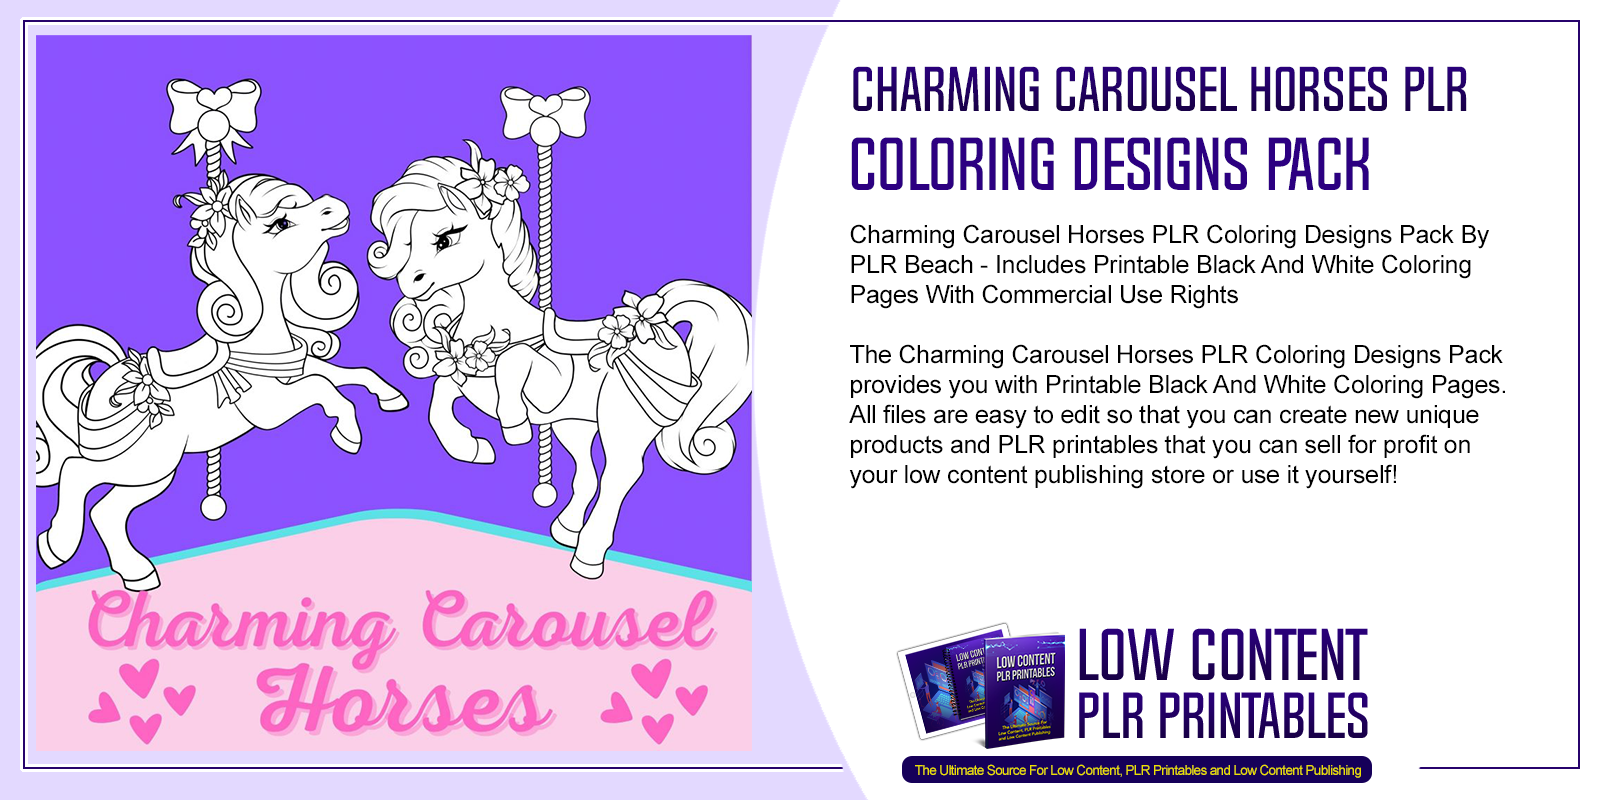 Charming Carousel Horses PLR Coloring Designs Pack